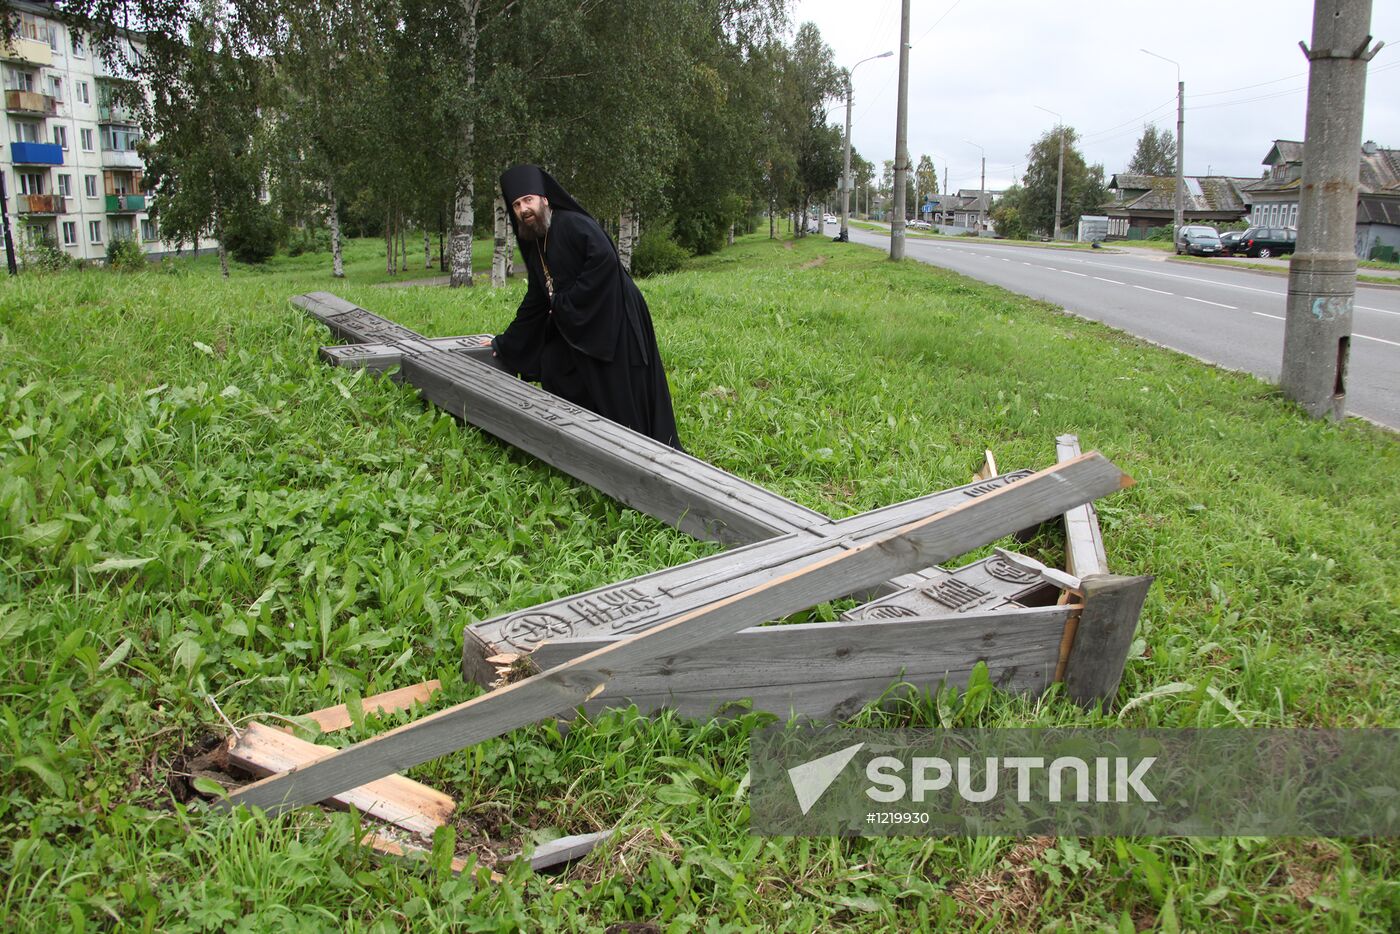 Vandals cut down worship cross in Arkhangelsk